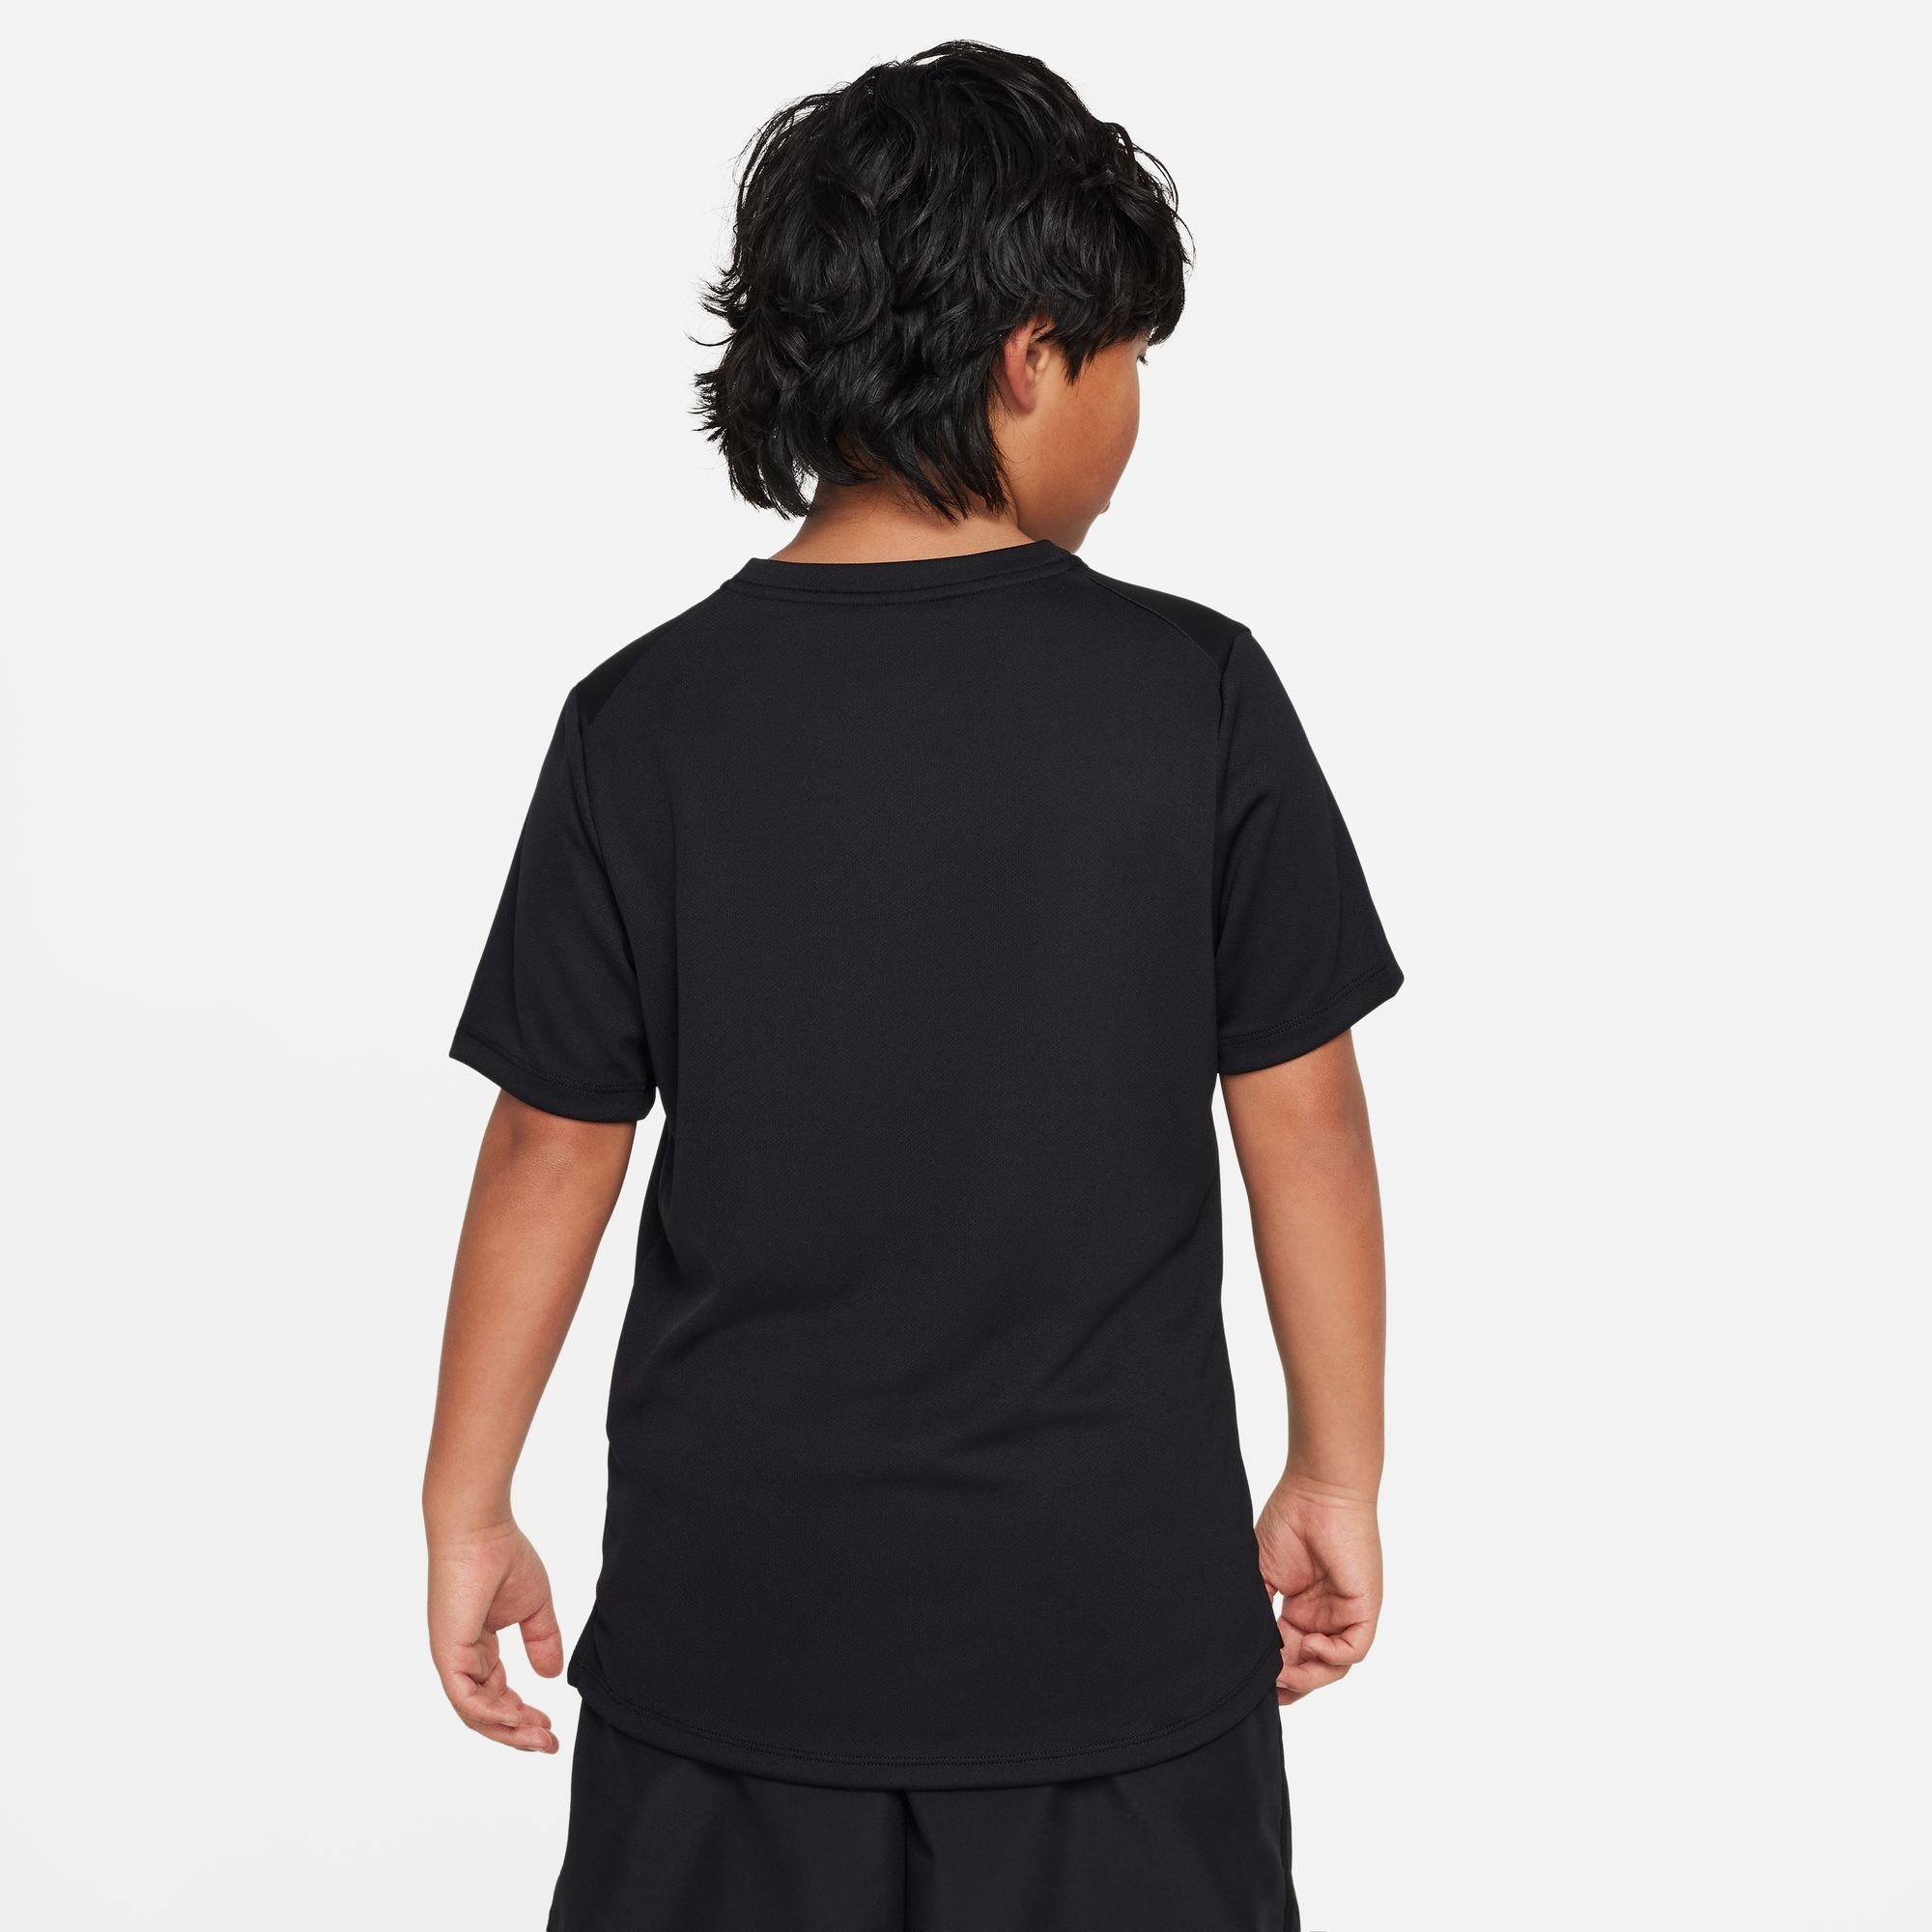 DRI-FIT BLACK/REFLECTIVE BIG MILER (BOYS) TOP Nike KIDS' SILV TRAINING Trainingsshirt SHORT-SLEEVE